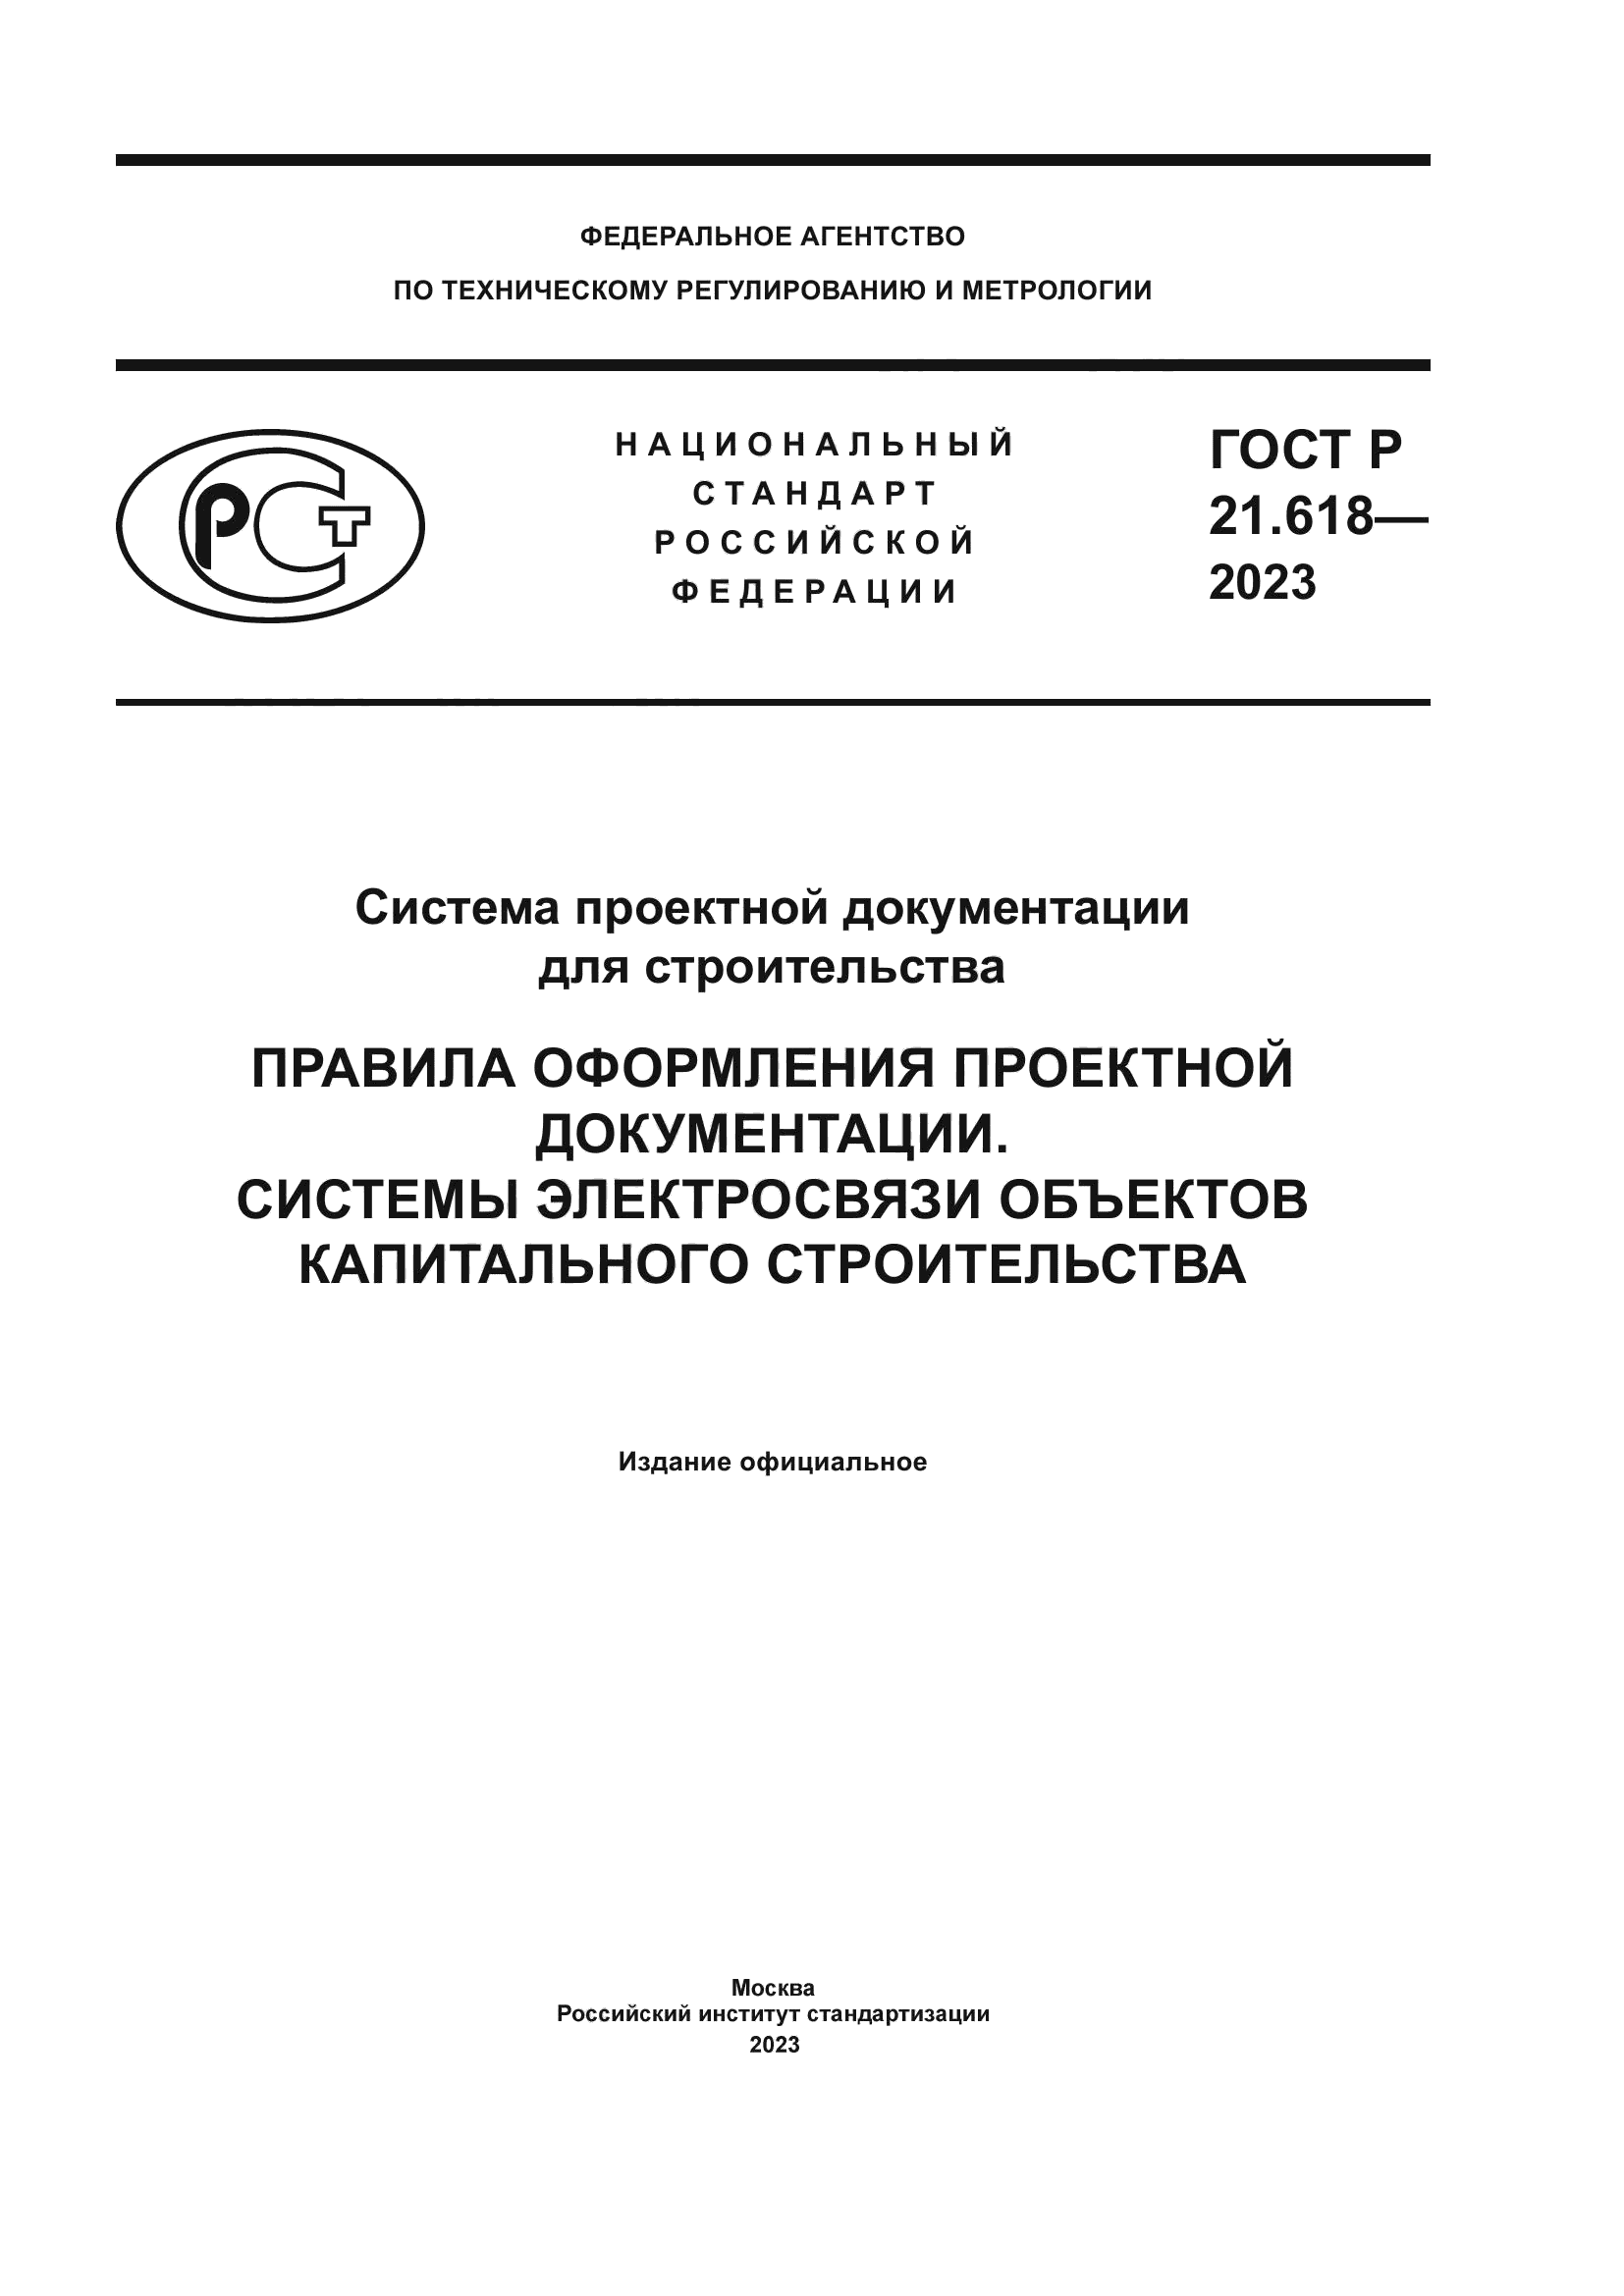 ГОСТ Р 21.618-2023